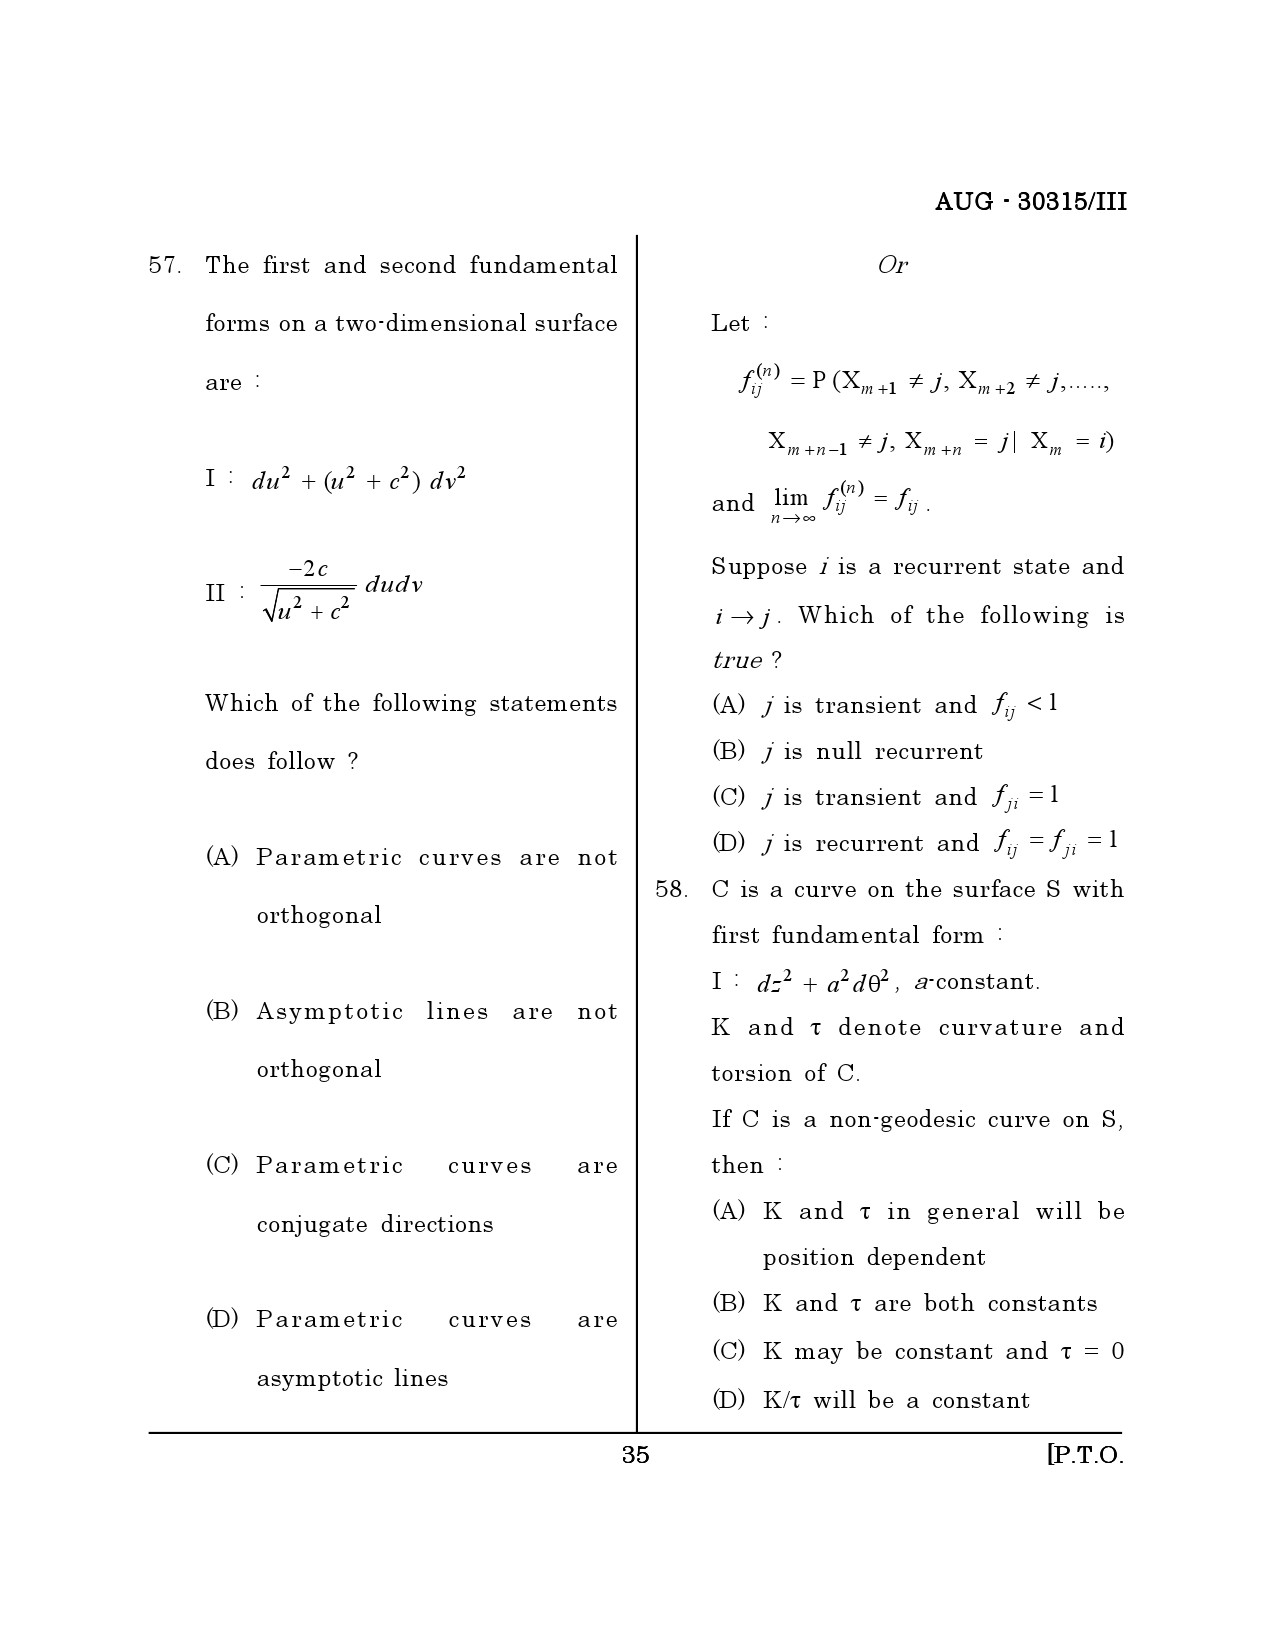 Maharashtra SET Mathematical Sciences Question Paper III August 2015 34